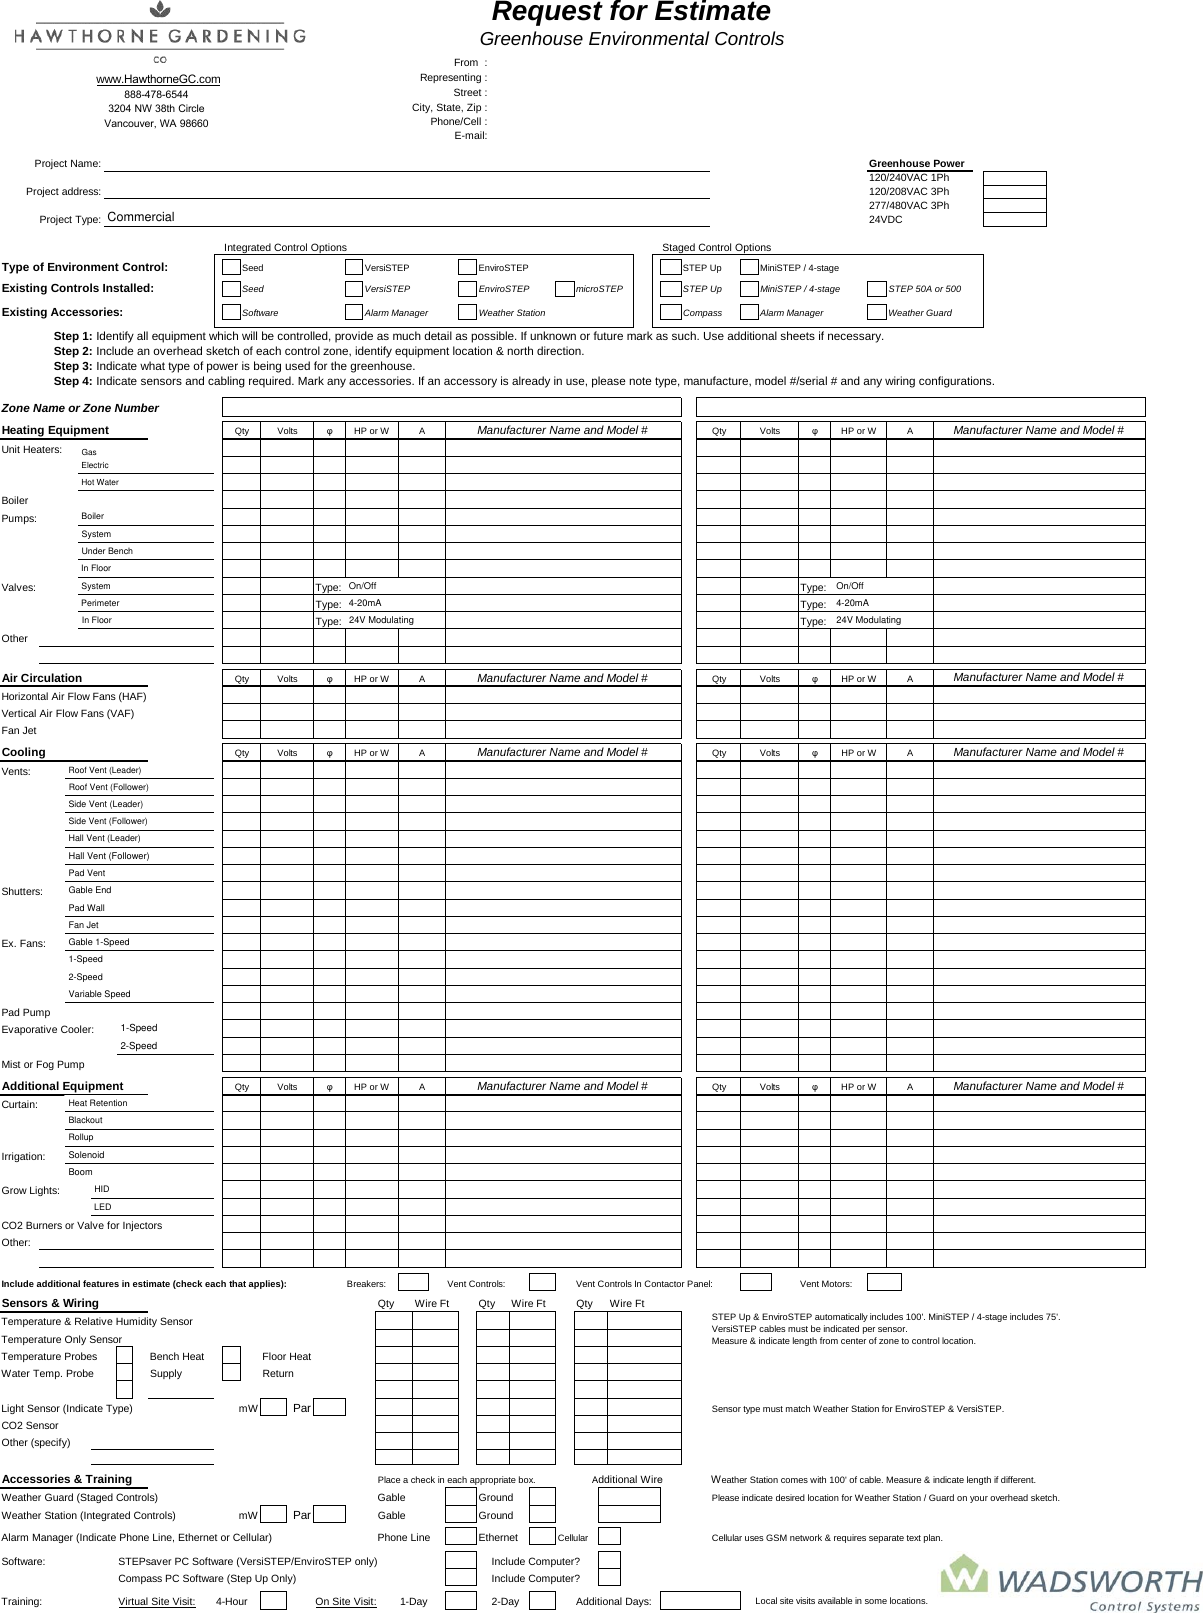 Page 1 of 1 - Wadsworth Estimate Request Form V416m  Hawthorne Gardening-Custom Controller